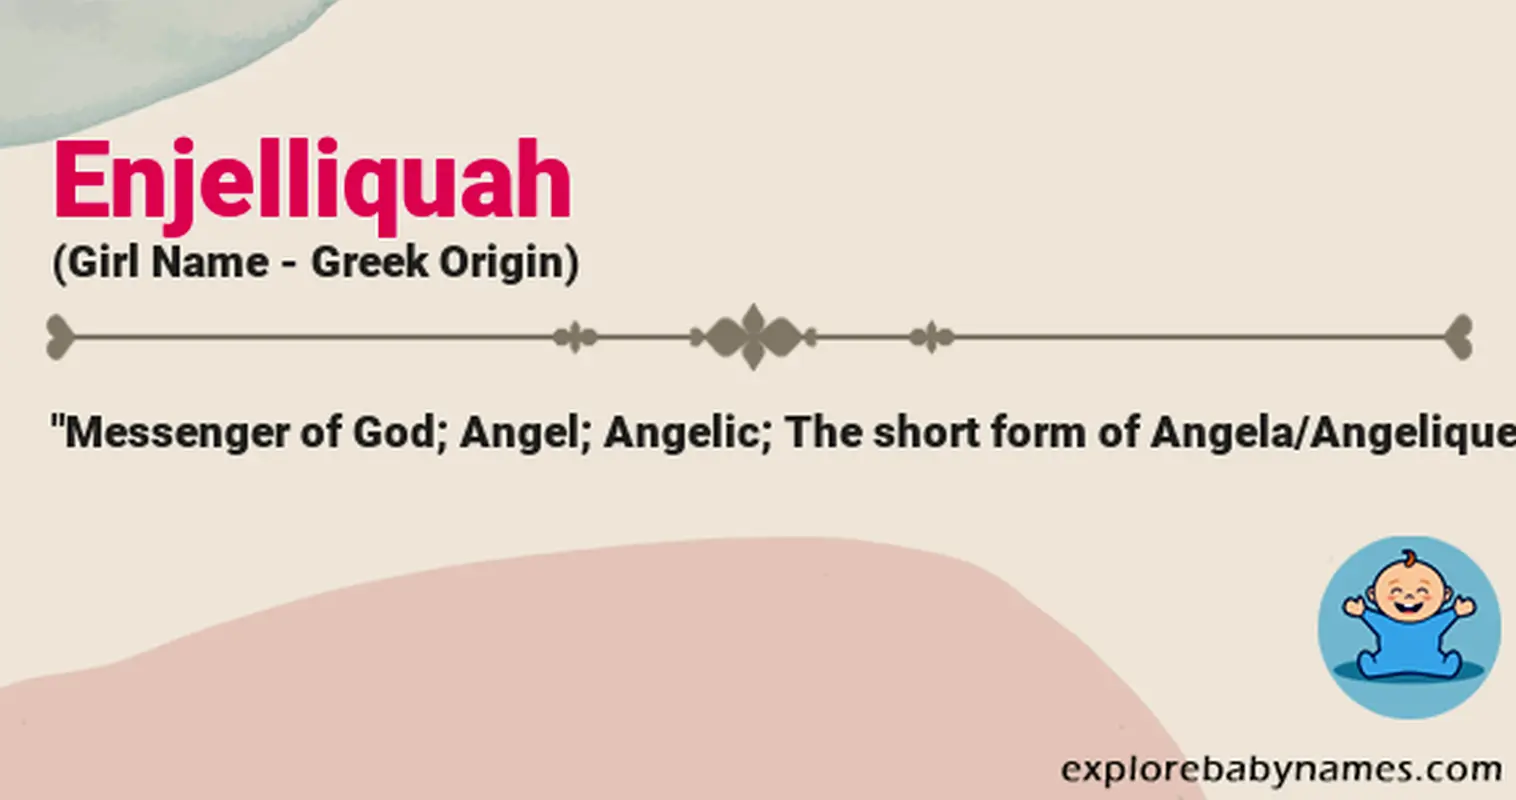 Meaning of Enjelliquah